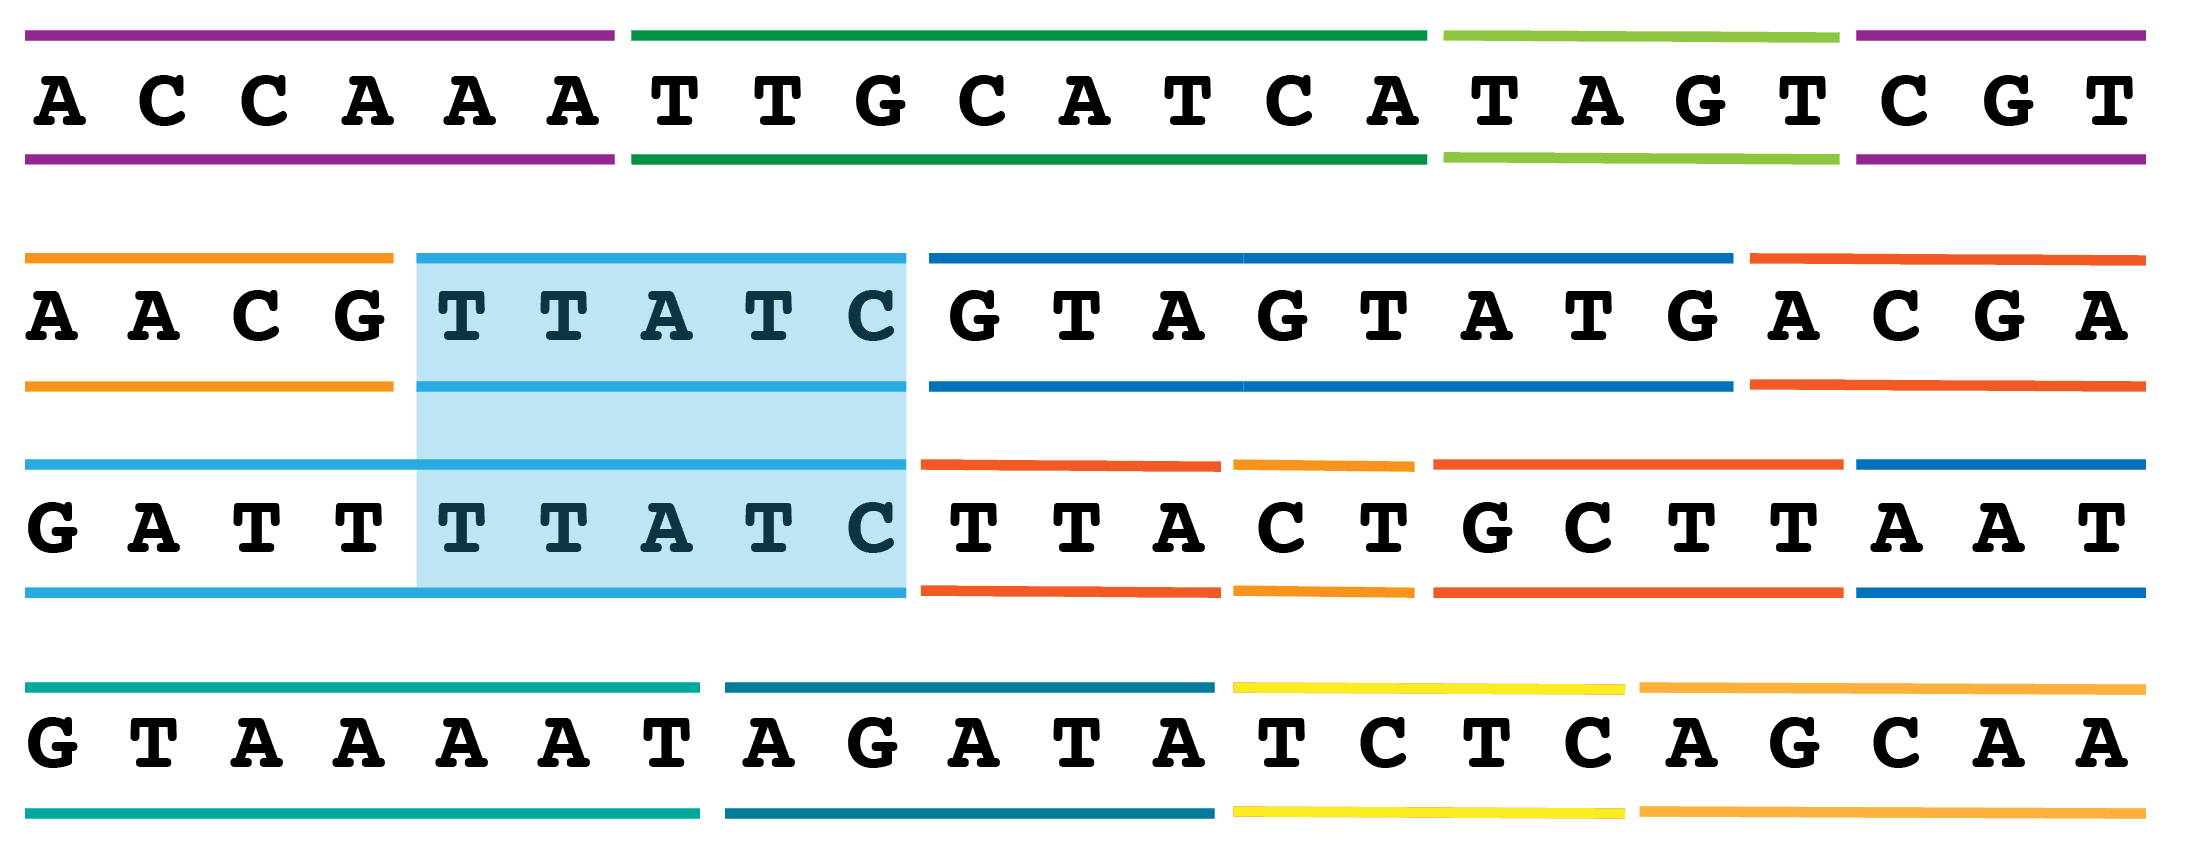 Close-up of DNA segment